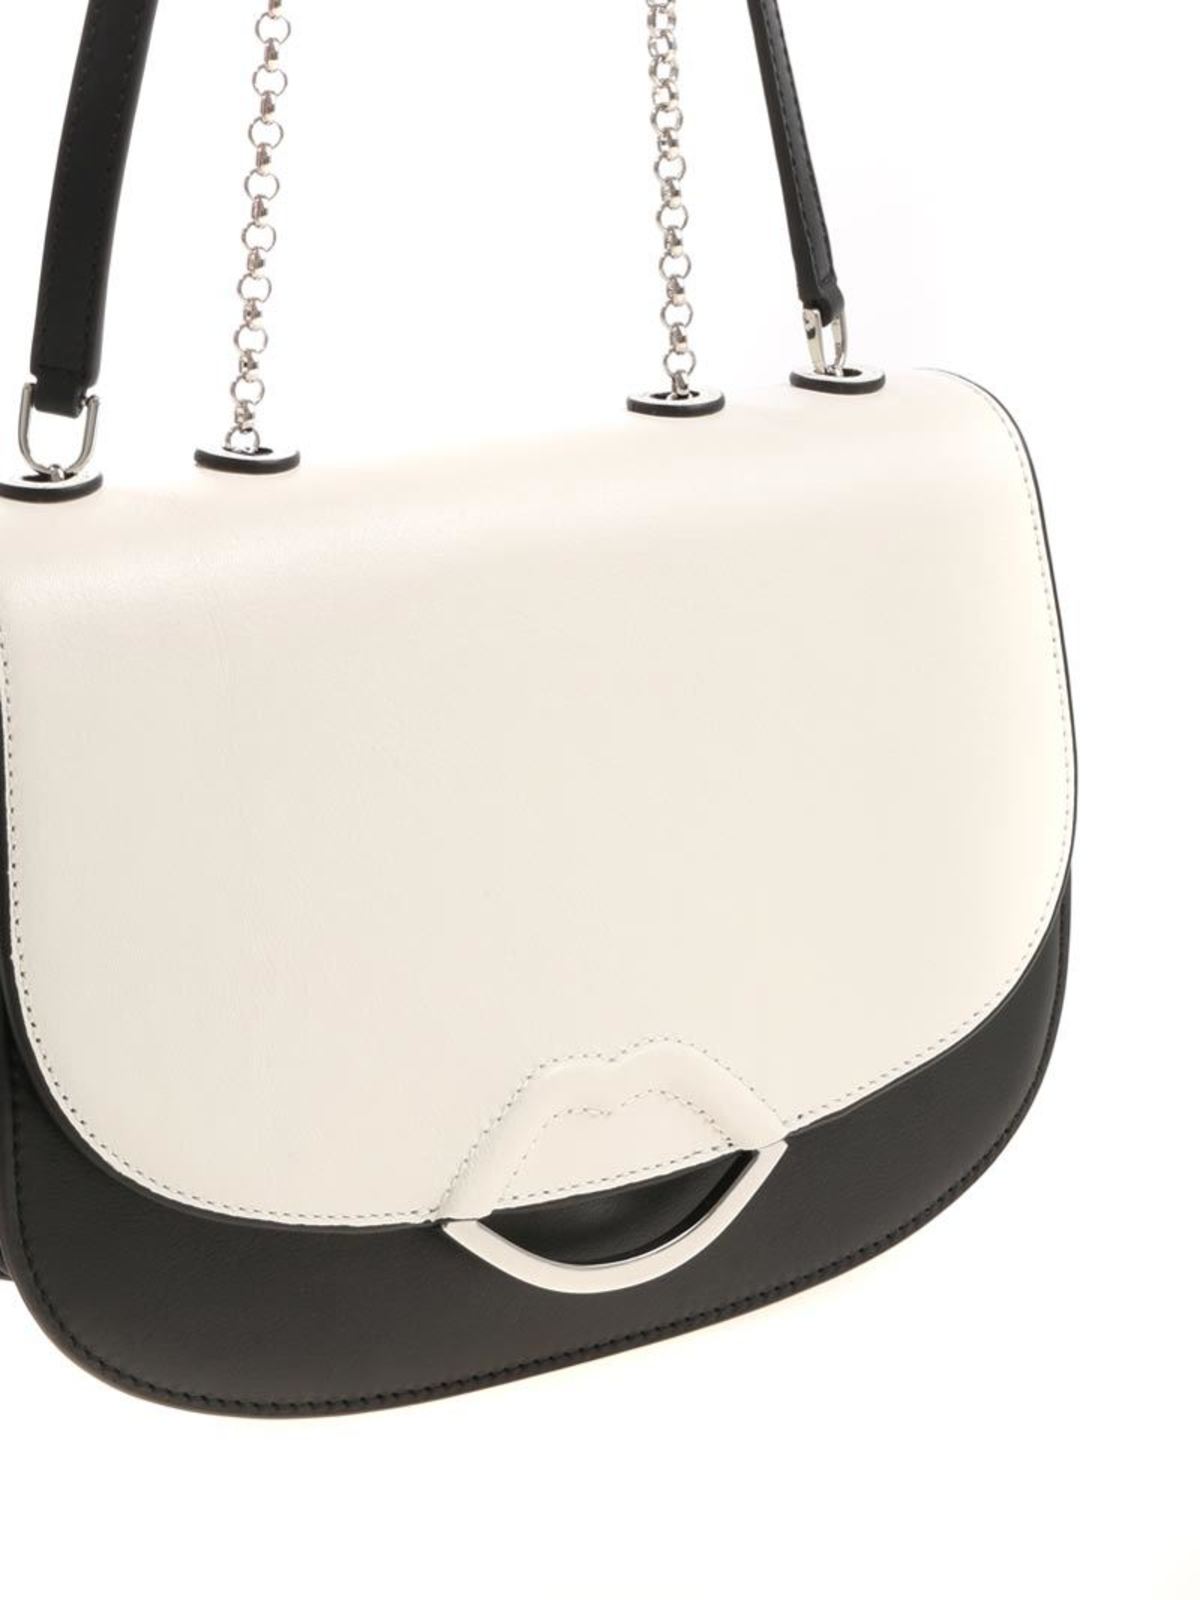 LULU by Guinness London Red Black Handbag Shoulder Bag Purse Tote Travel  CLEAN | eBay